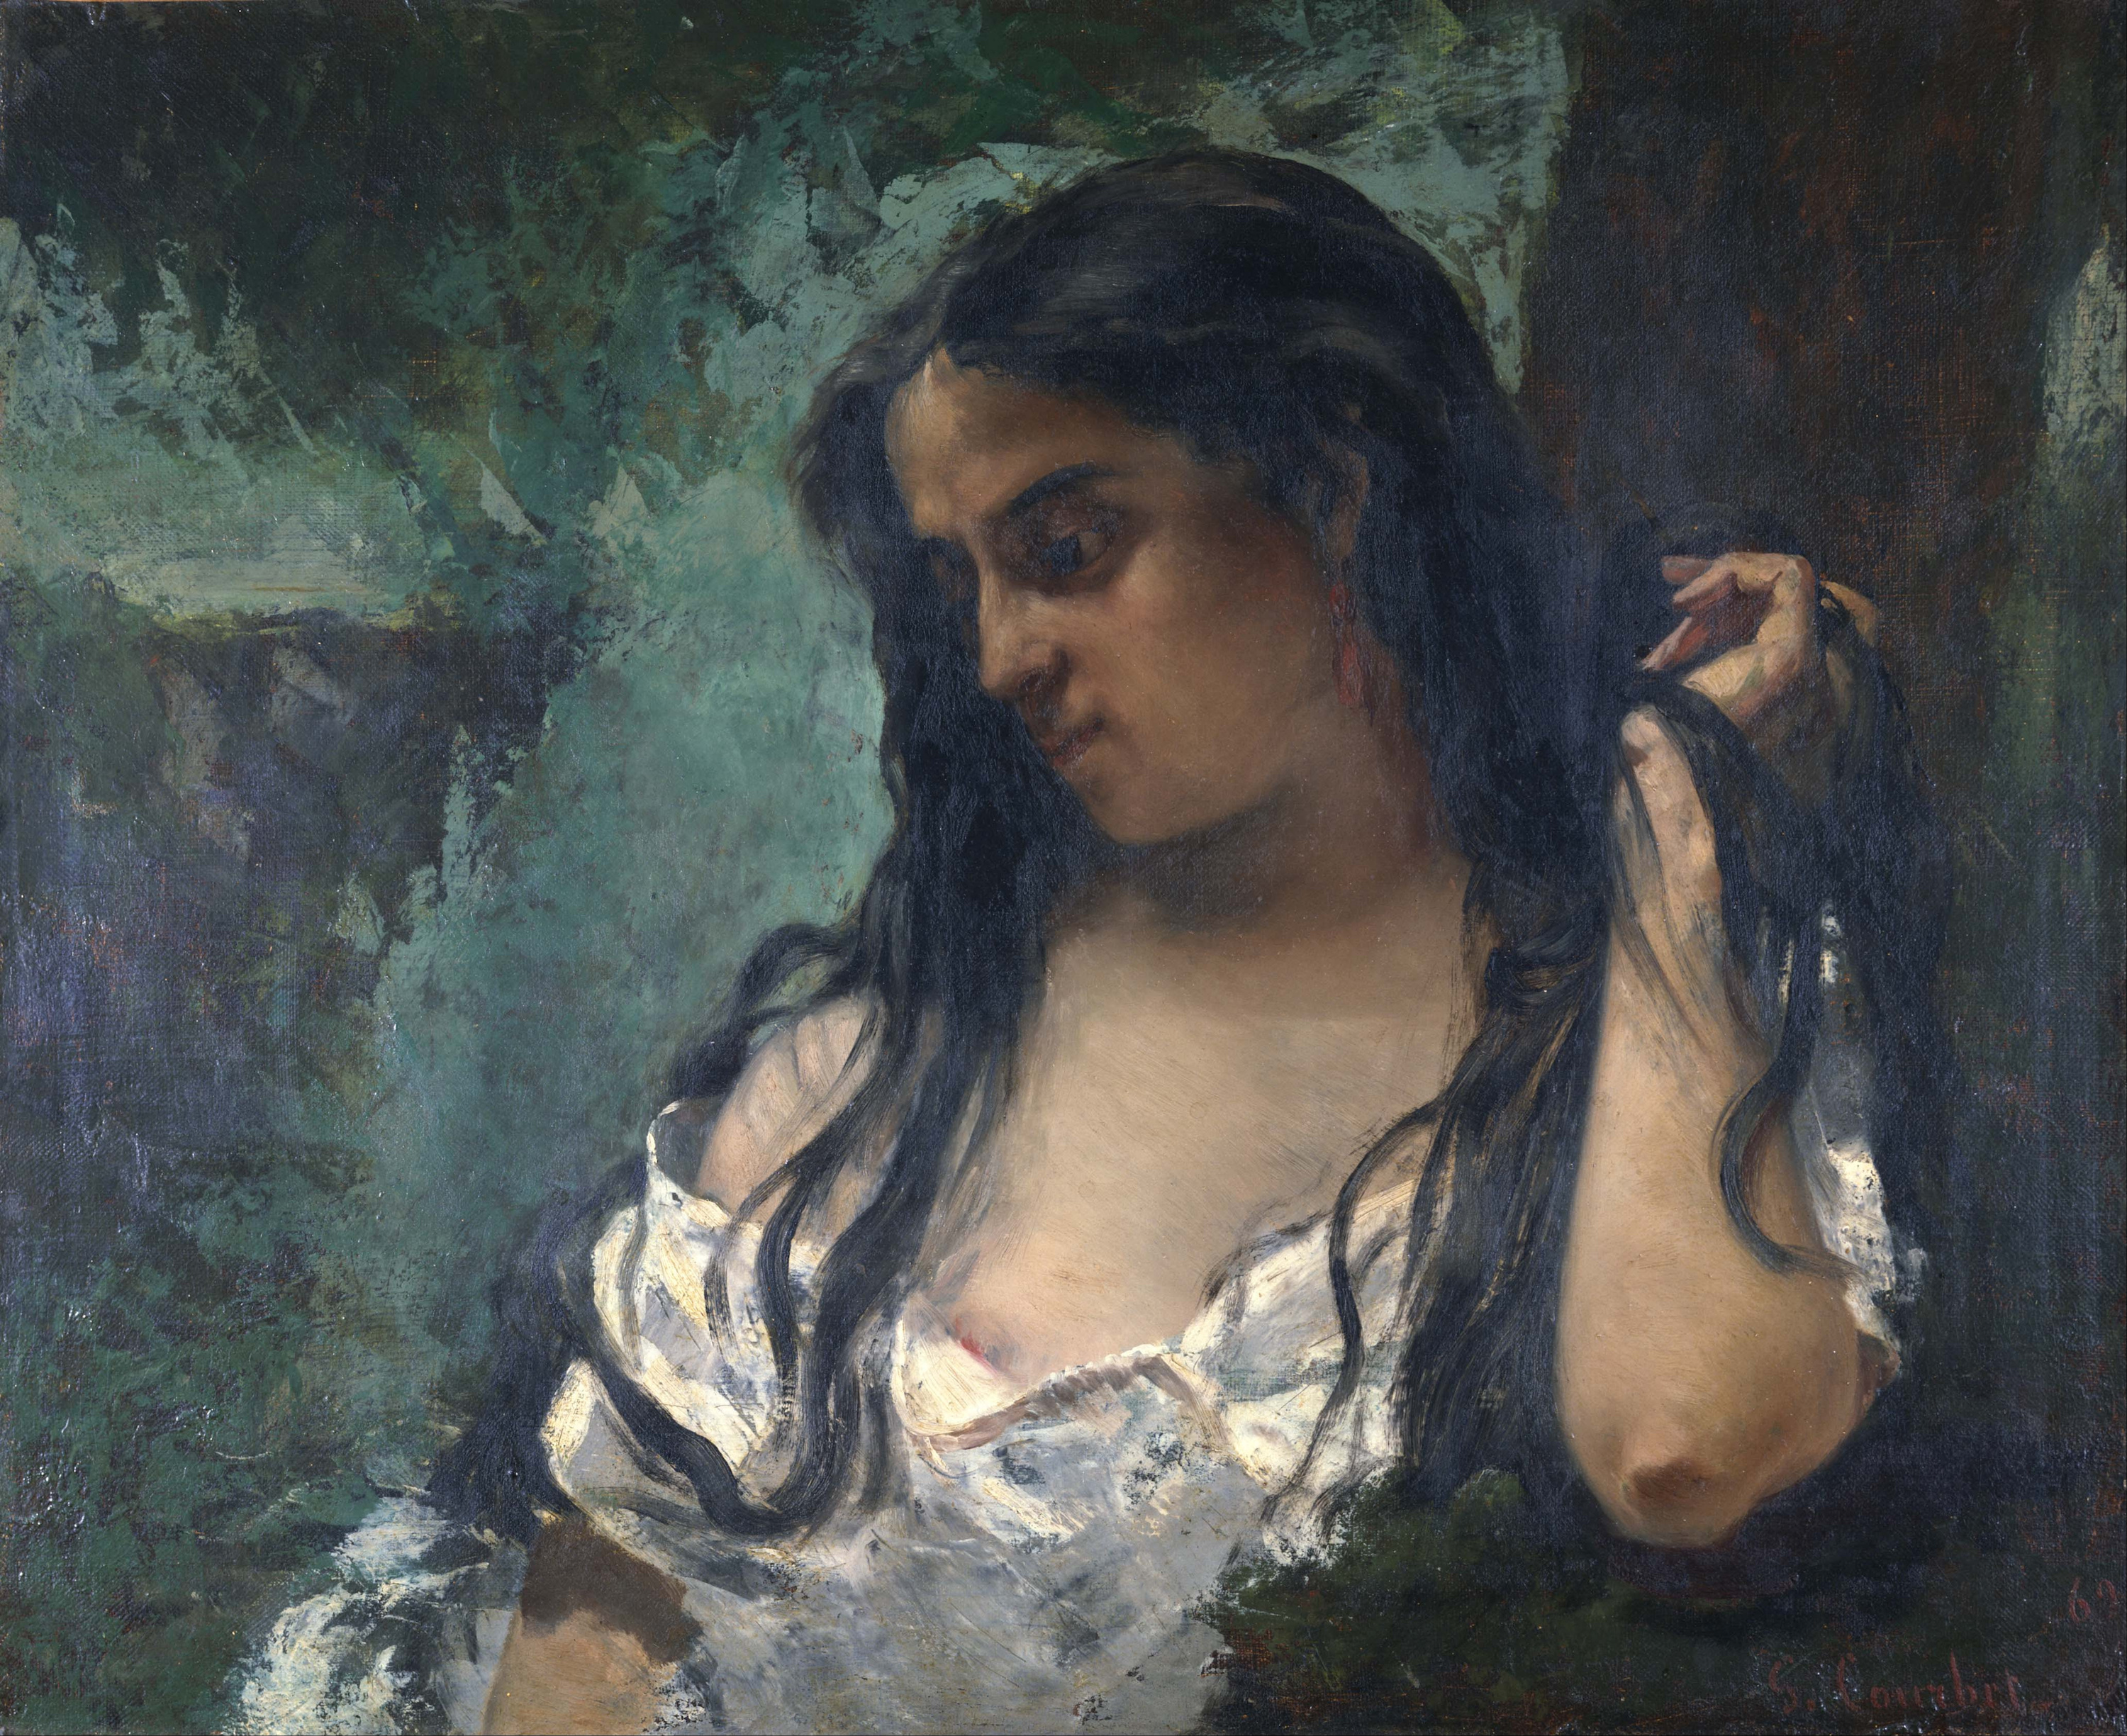 La gitane pensive by Gustave Courbet - 1869 